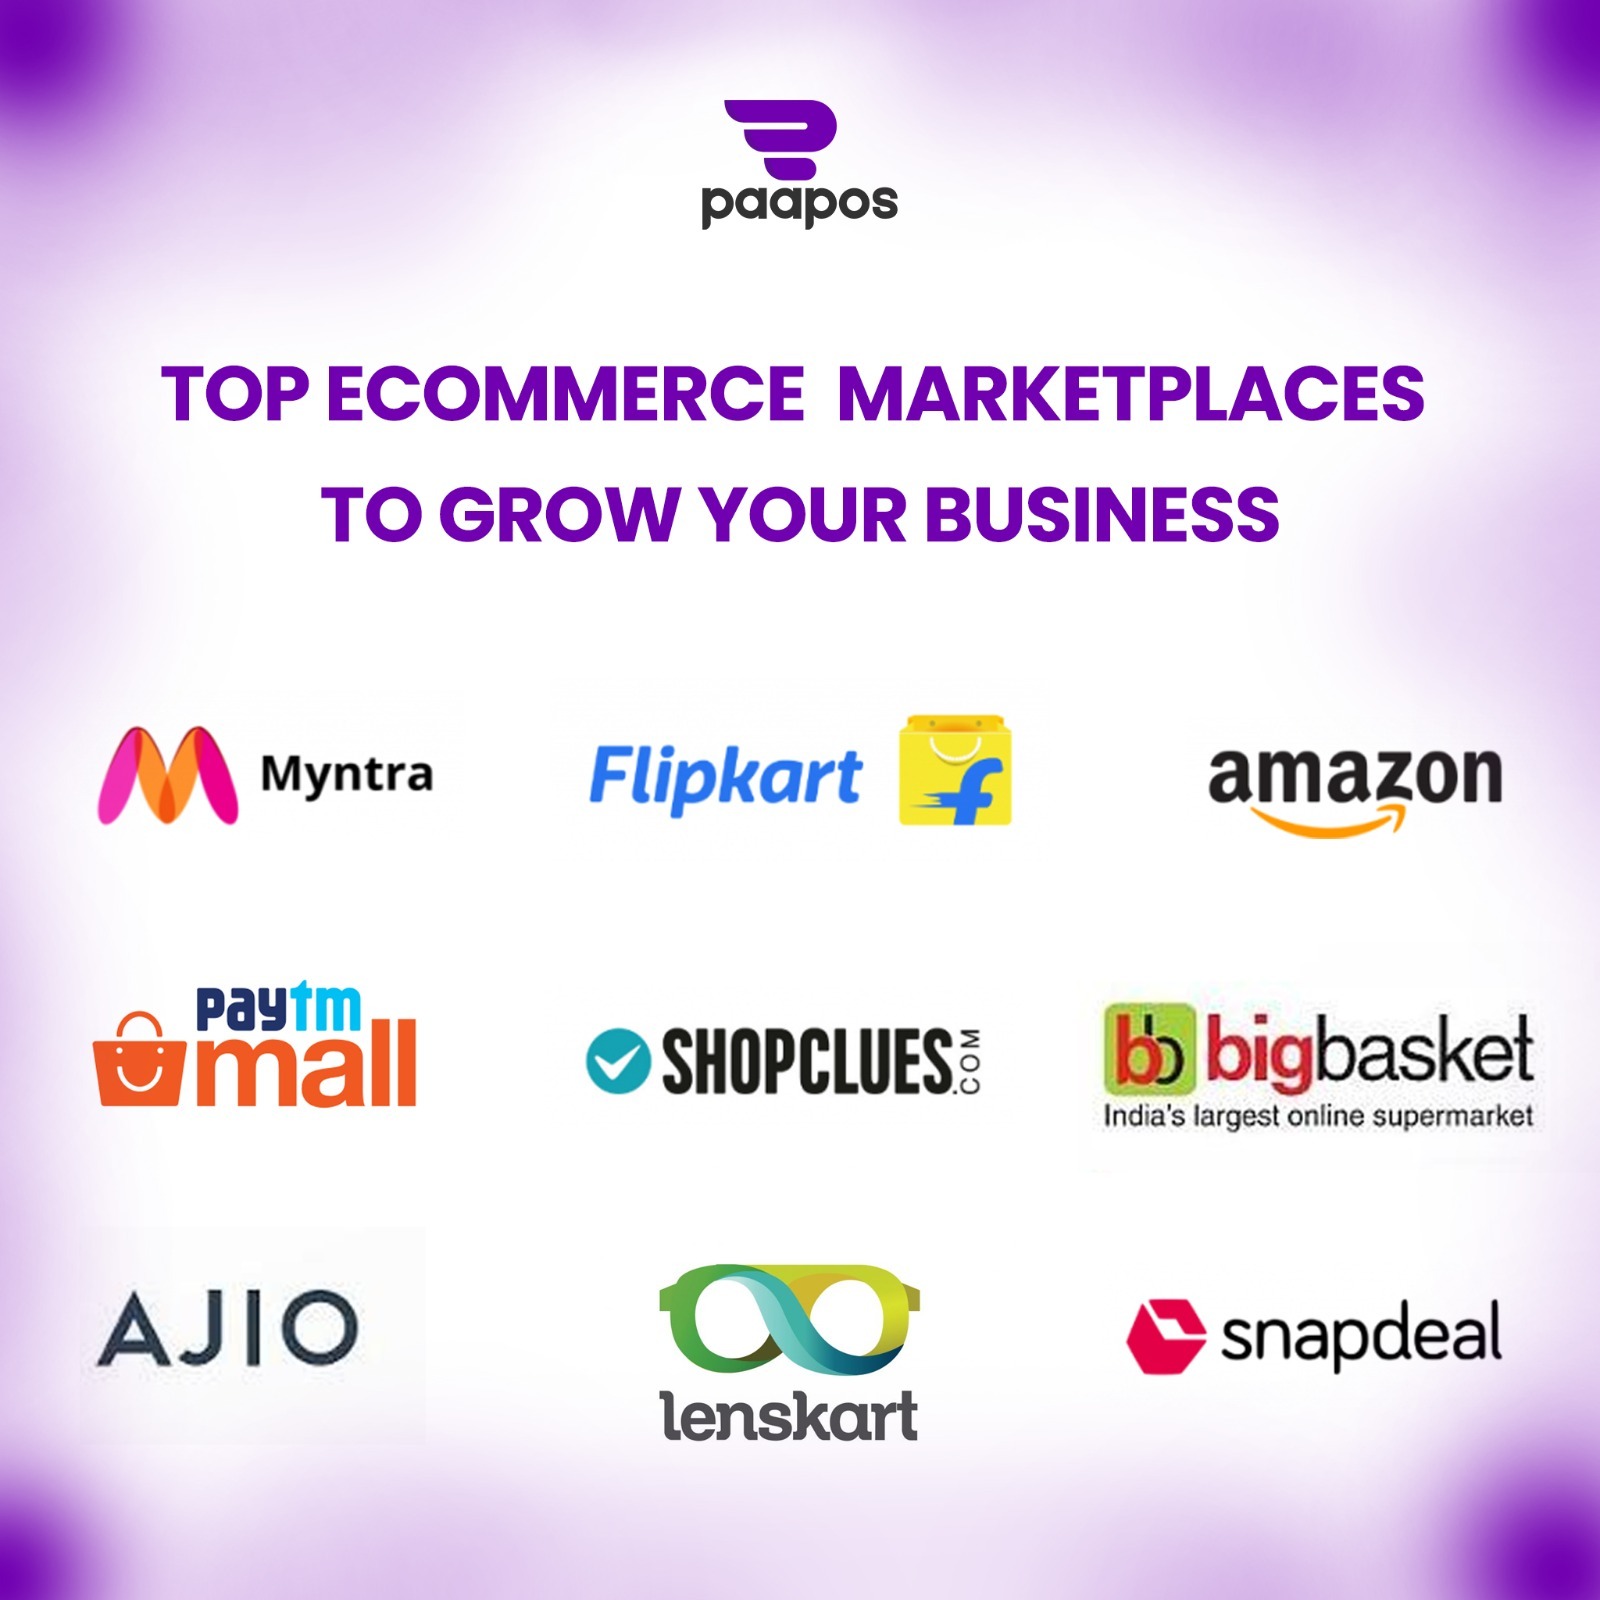 Top eCommerce Marketplaces